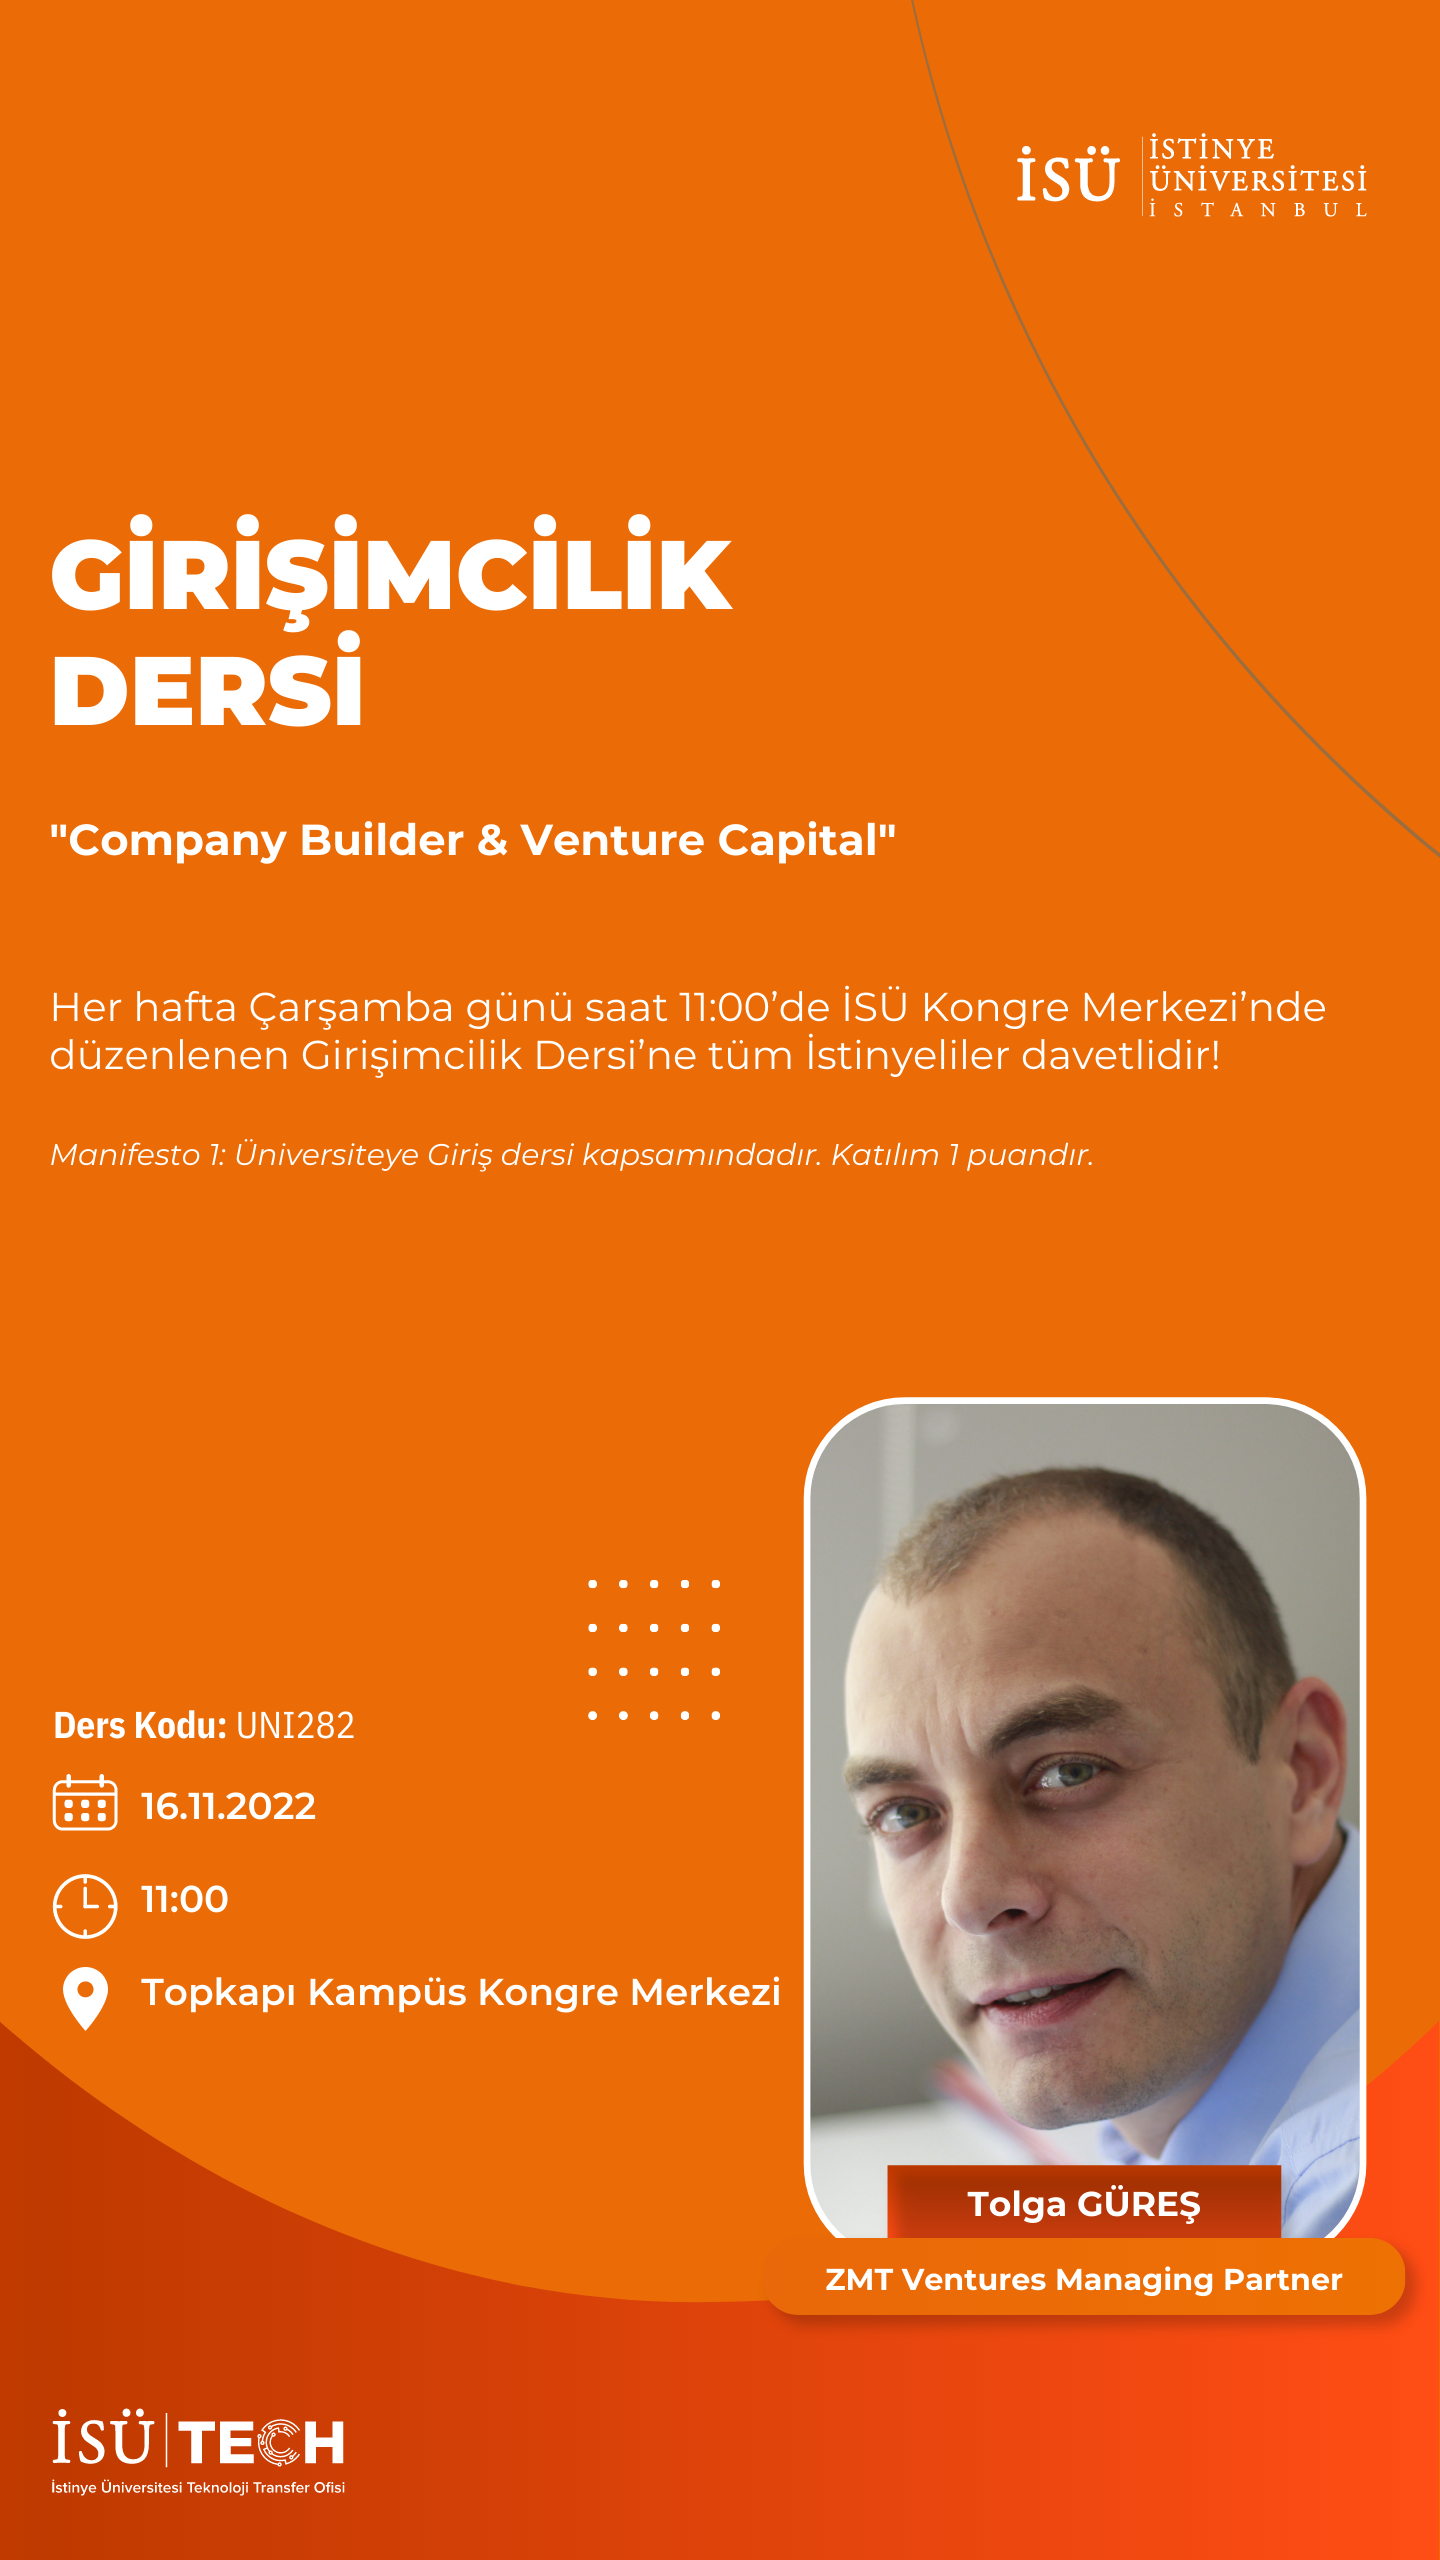 Girişimcilik Dersi "Company Builder & Venture Capital"